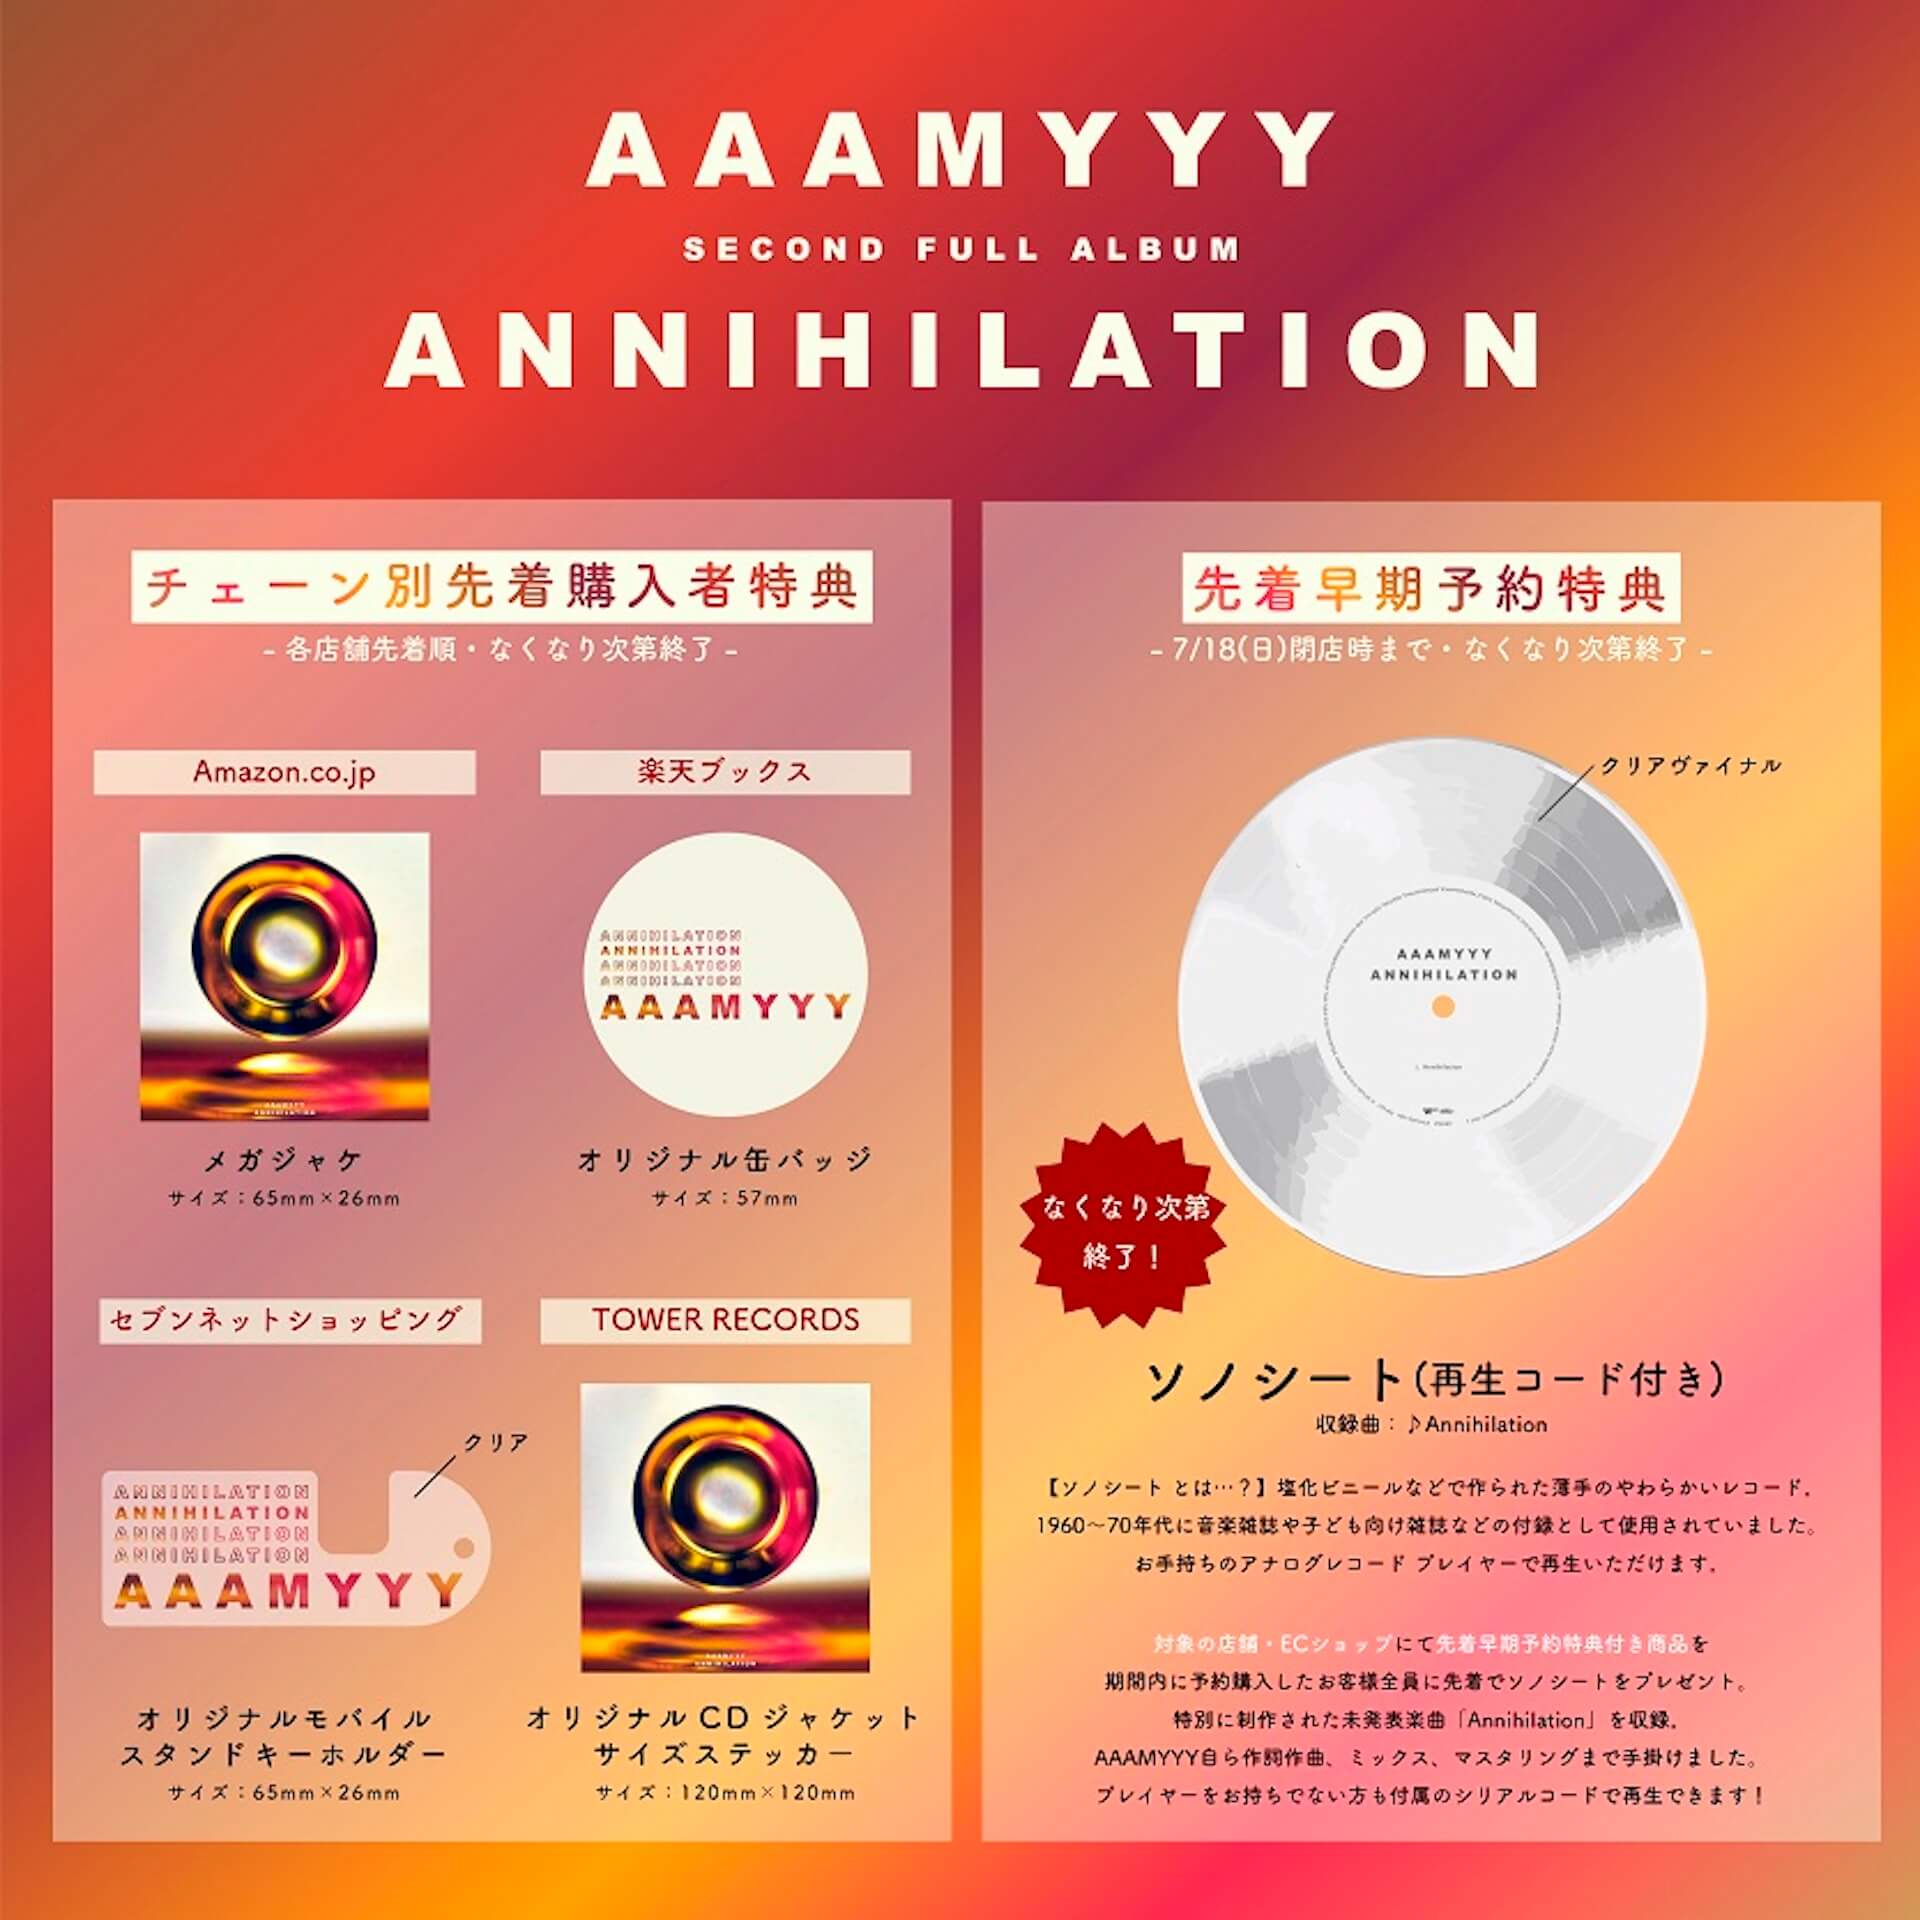 AAAMYYYYの約2年半ぶりとなる2ndフルアルバム『Annihilation』より“AFTER LIFE”のMVが先行公開！ music10618_AAAMYYY_annihilation3